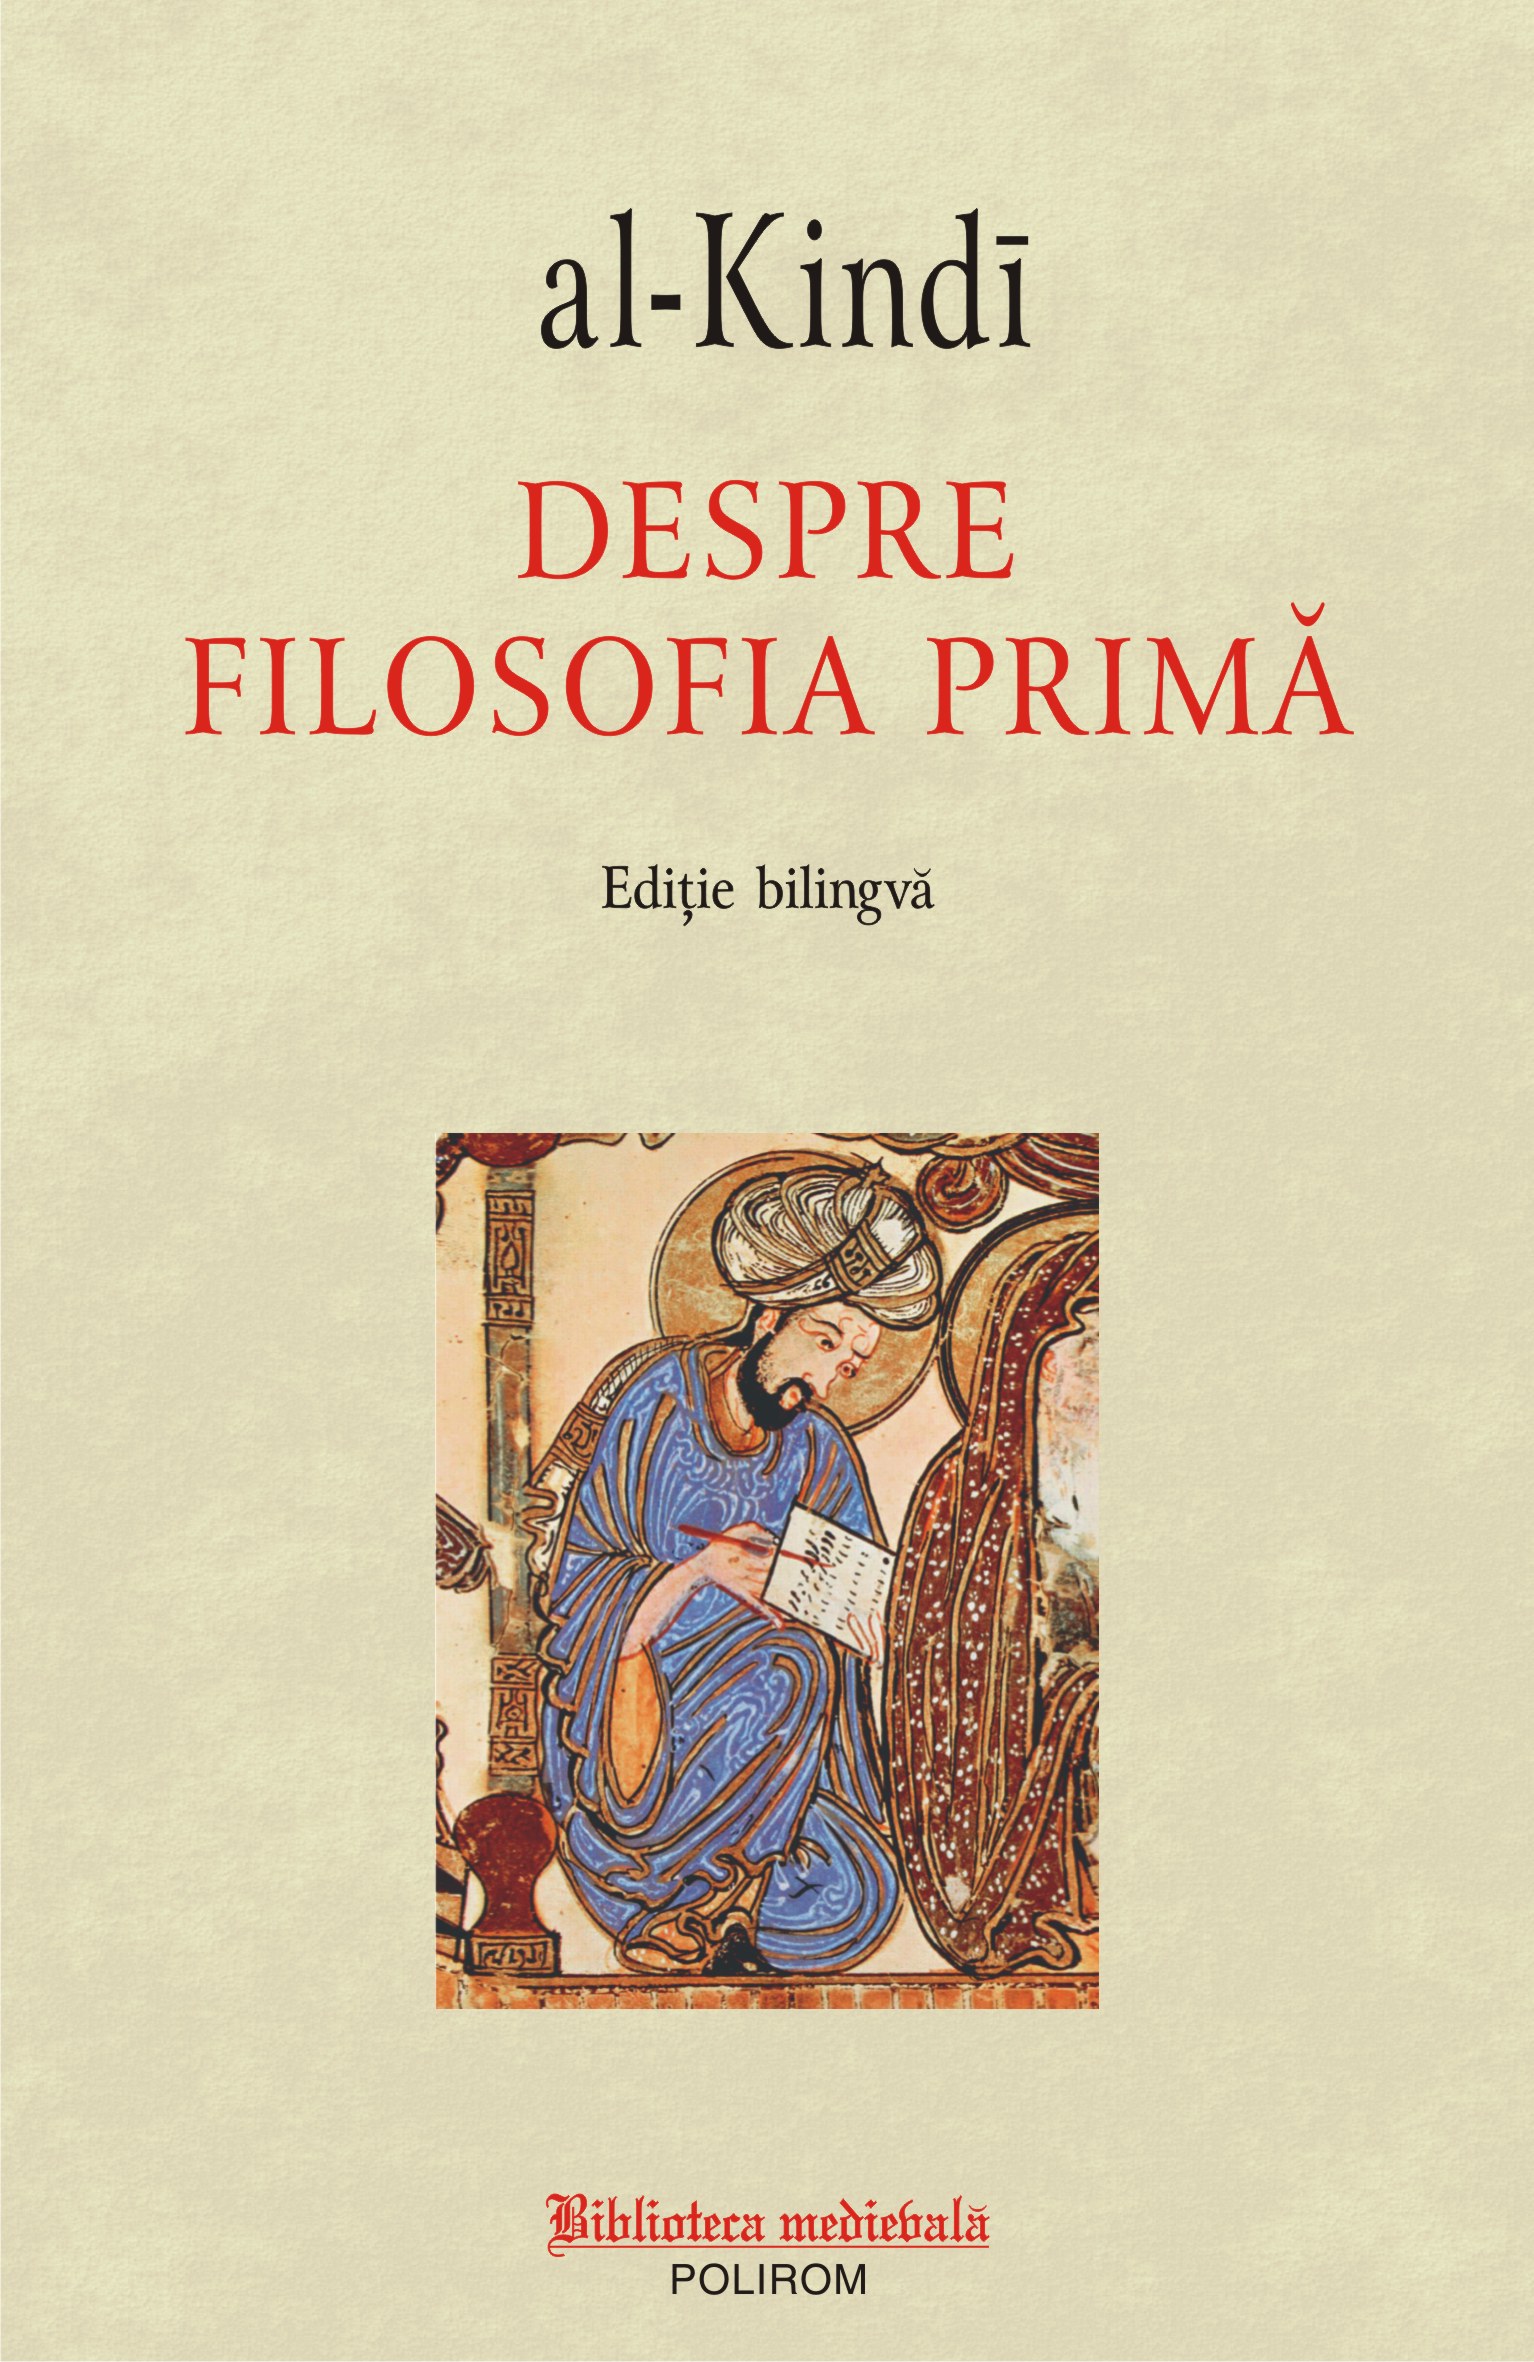 eBook Despre filosofia prima - Al-Kindi